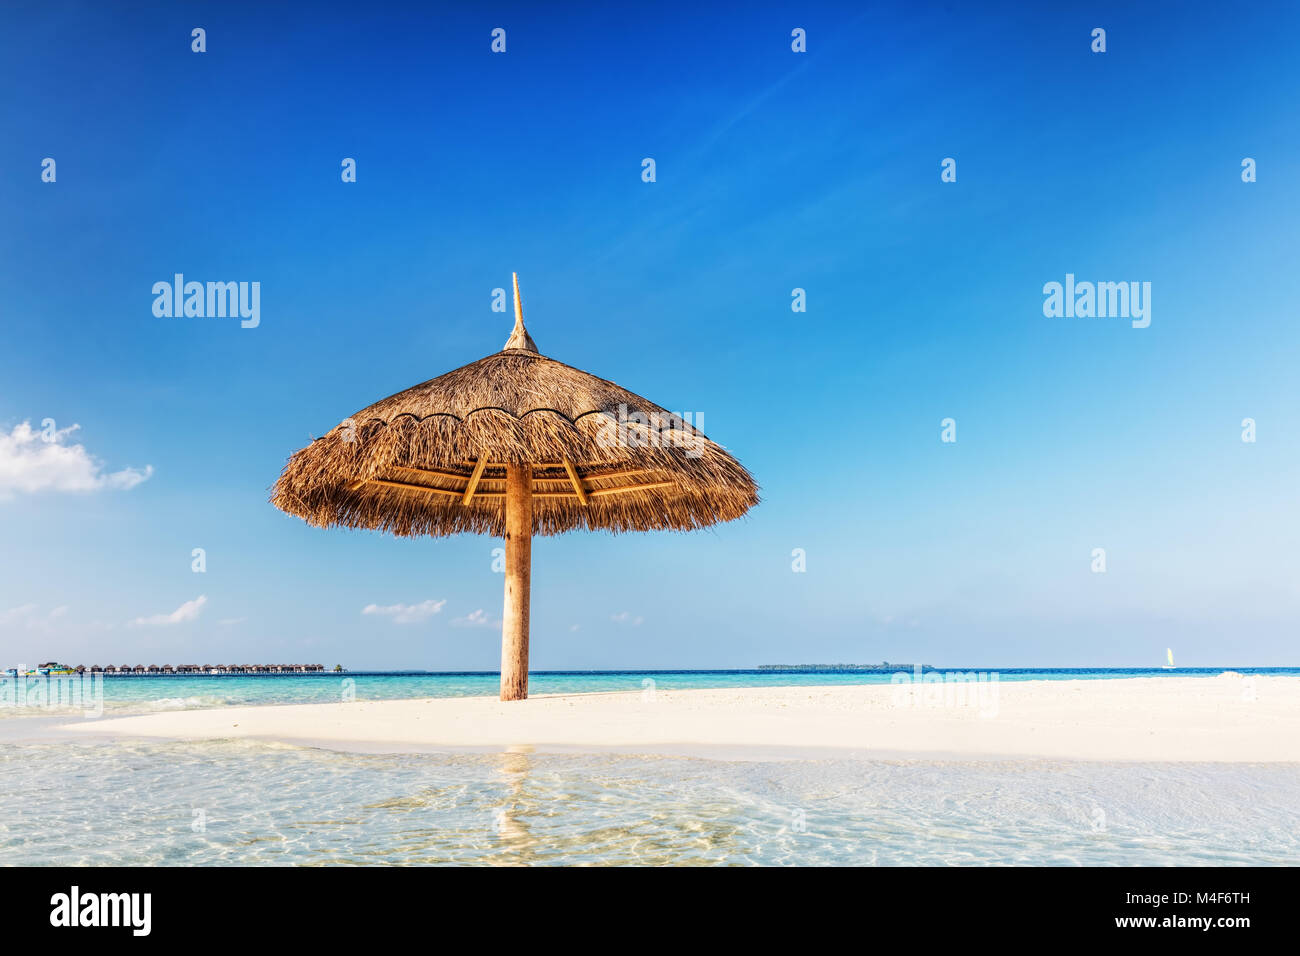 Tropical sandbank island with sunshade umbrella. Indian Ocean, Maldives. Stock Photo